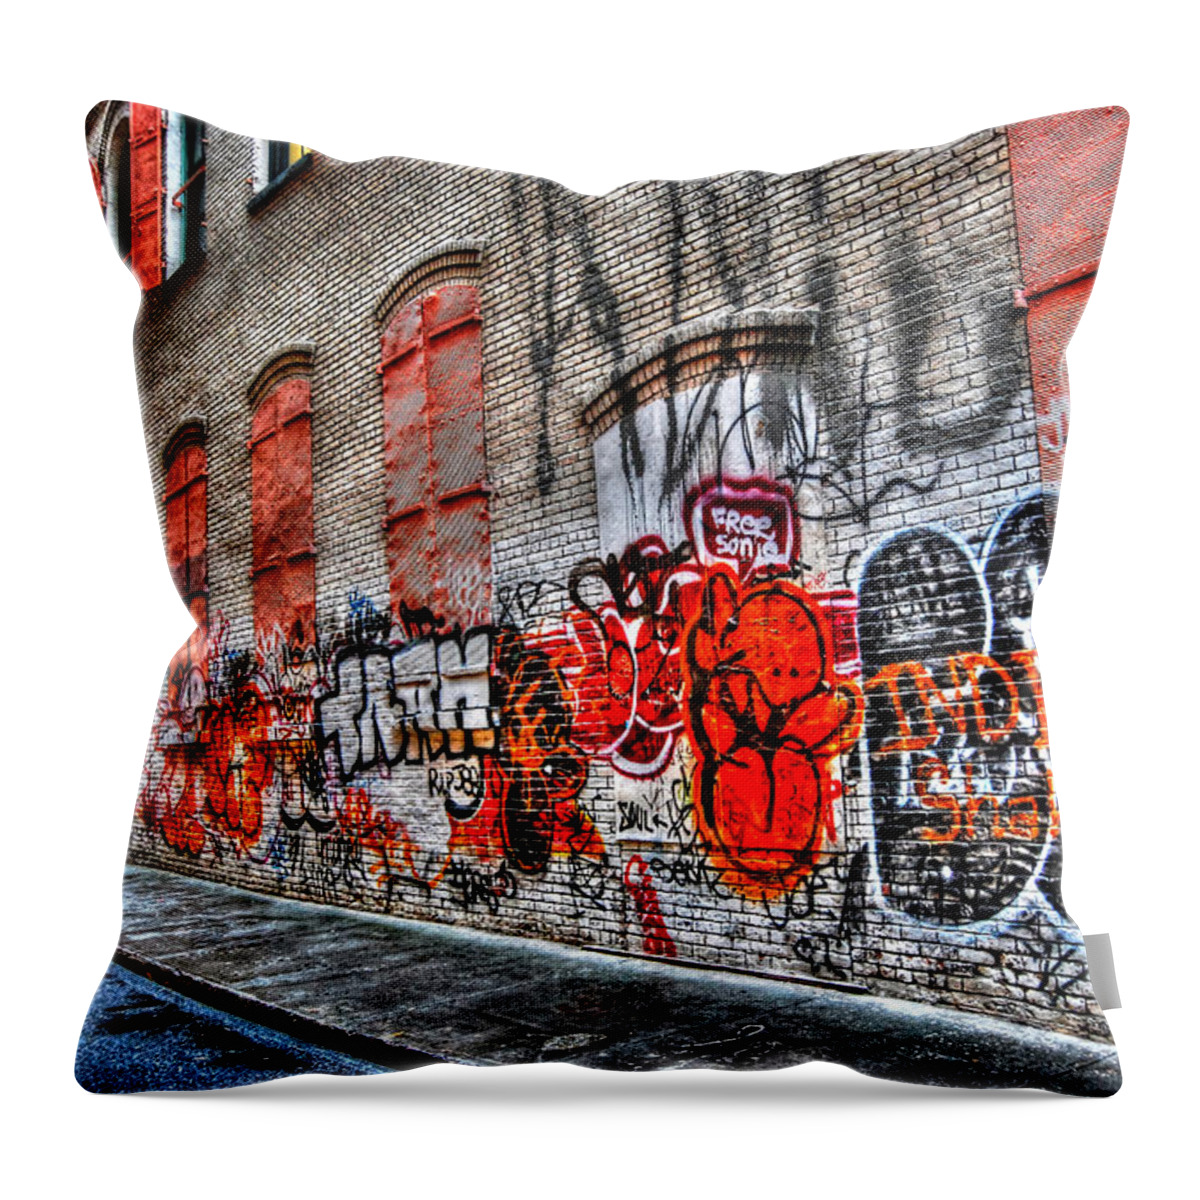 Graffiti Throw Pillow featuring the photograph Mulberry Street Graffiti by Randy Aveille